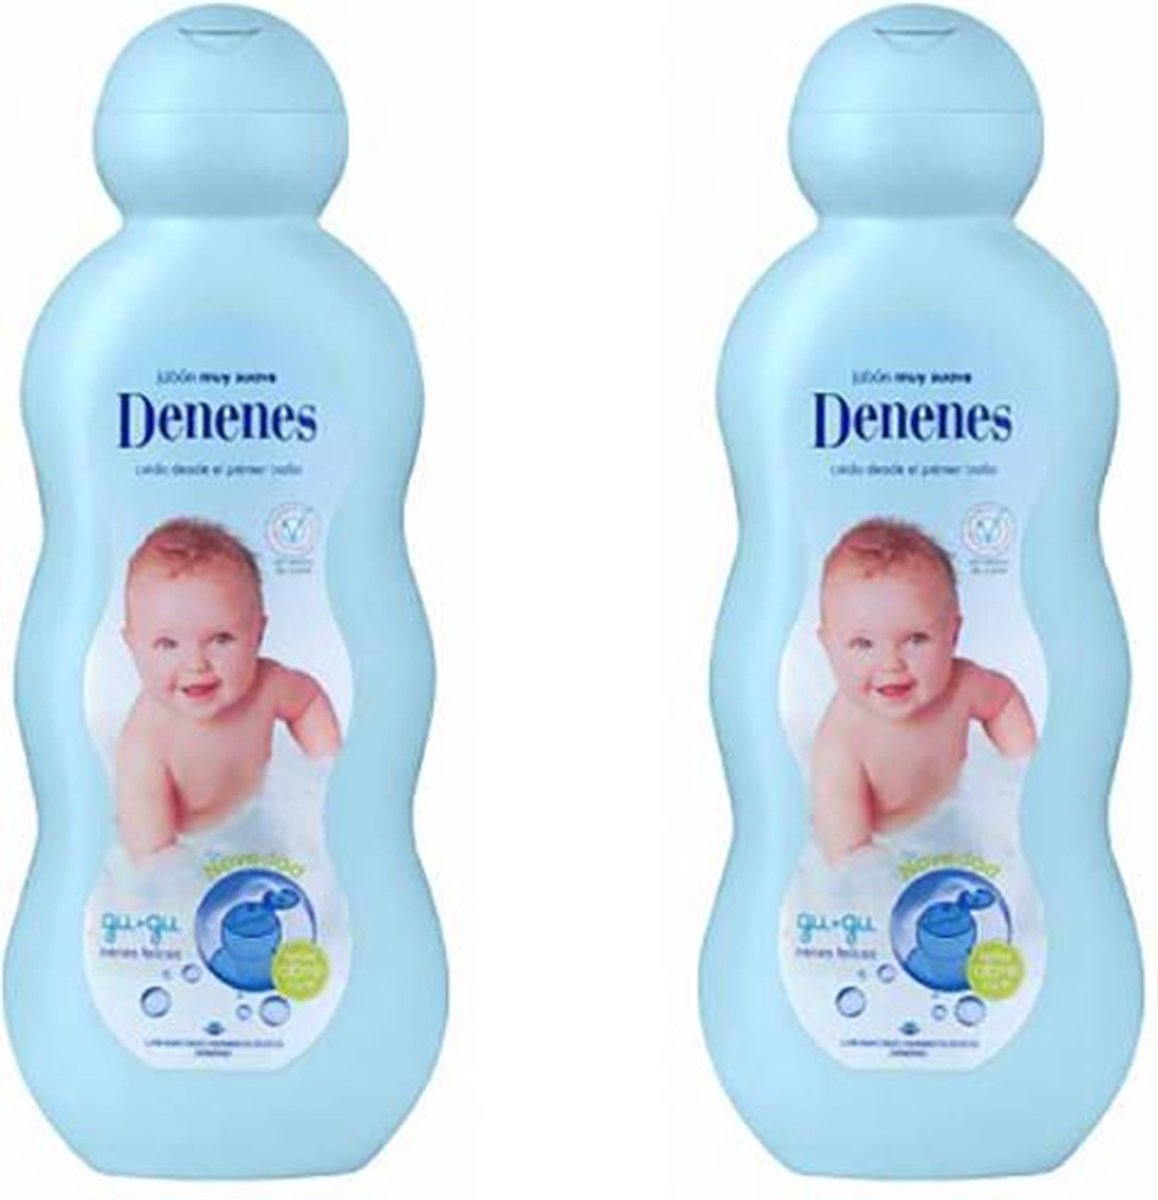 Denenes - Baby Bad - Voordeelset 2 stuks a 750 ml.